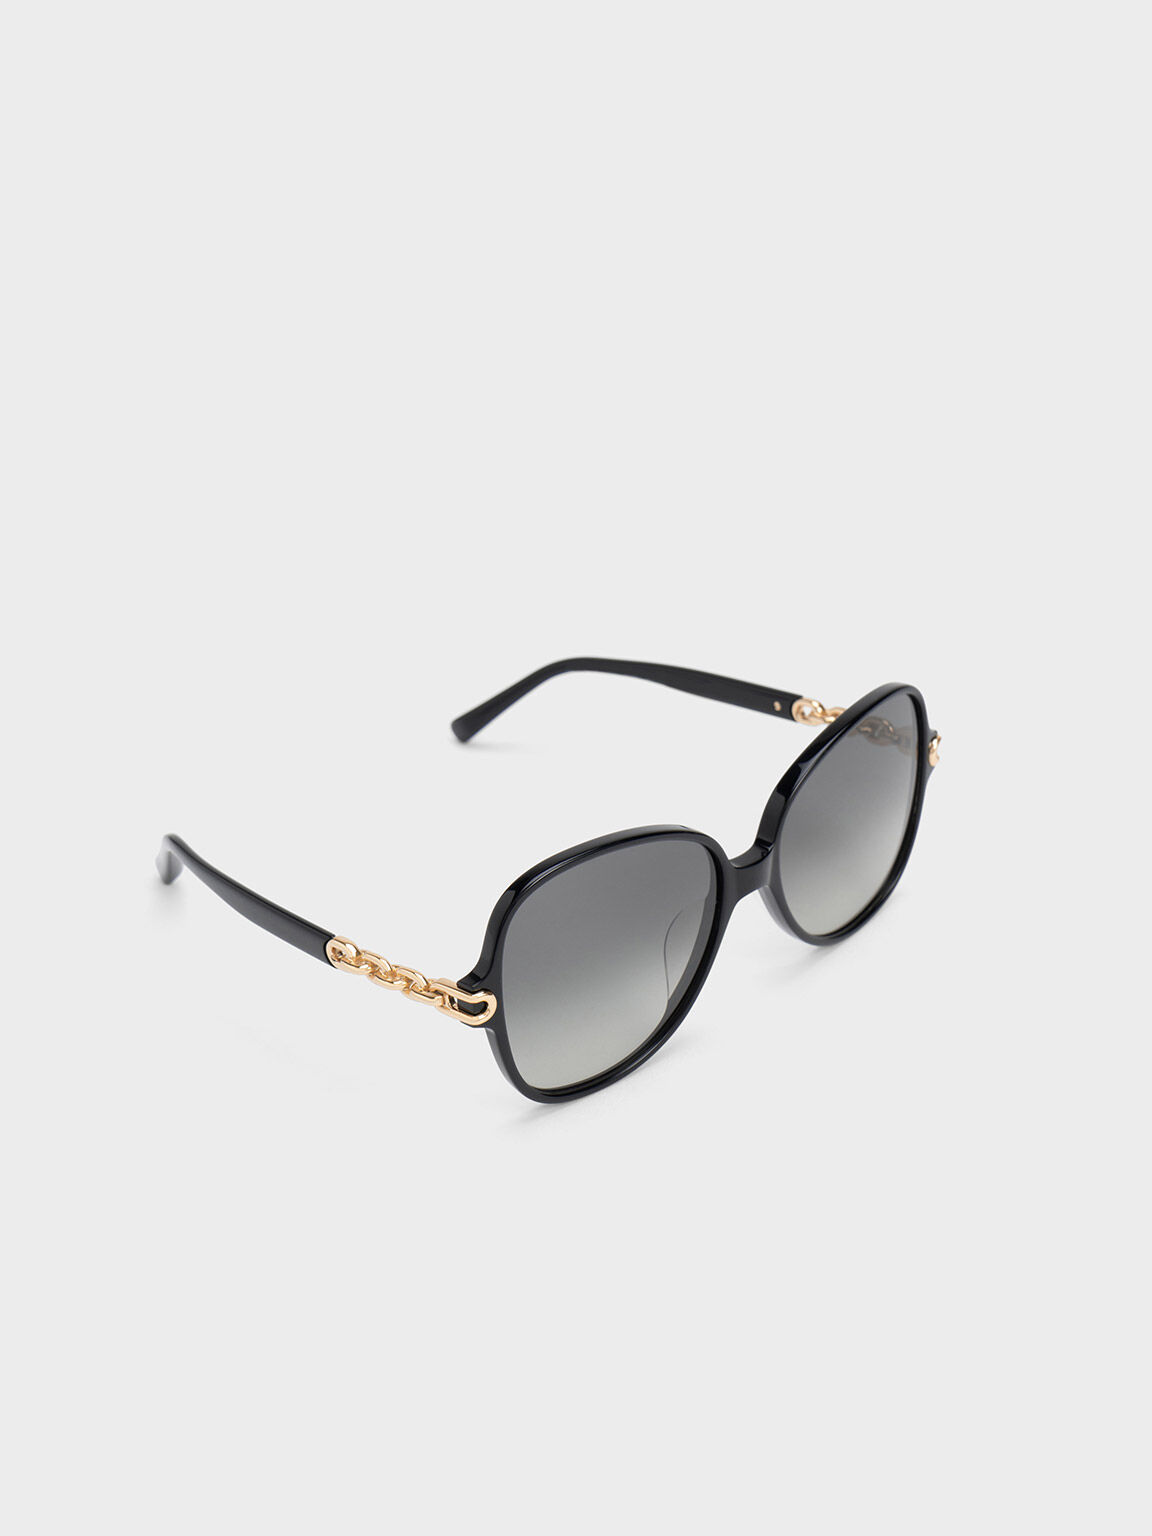 Chanel-sunglasses - Eflina